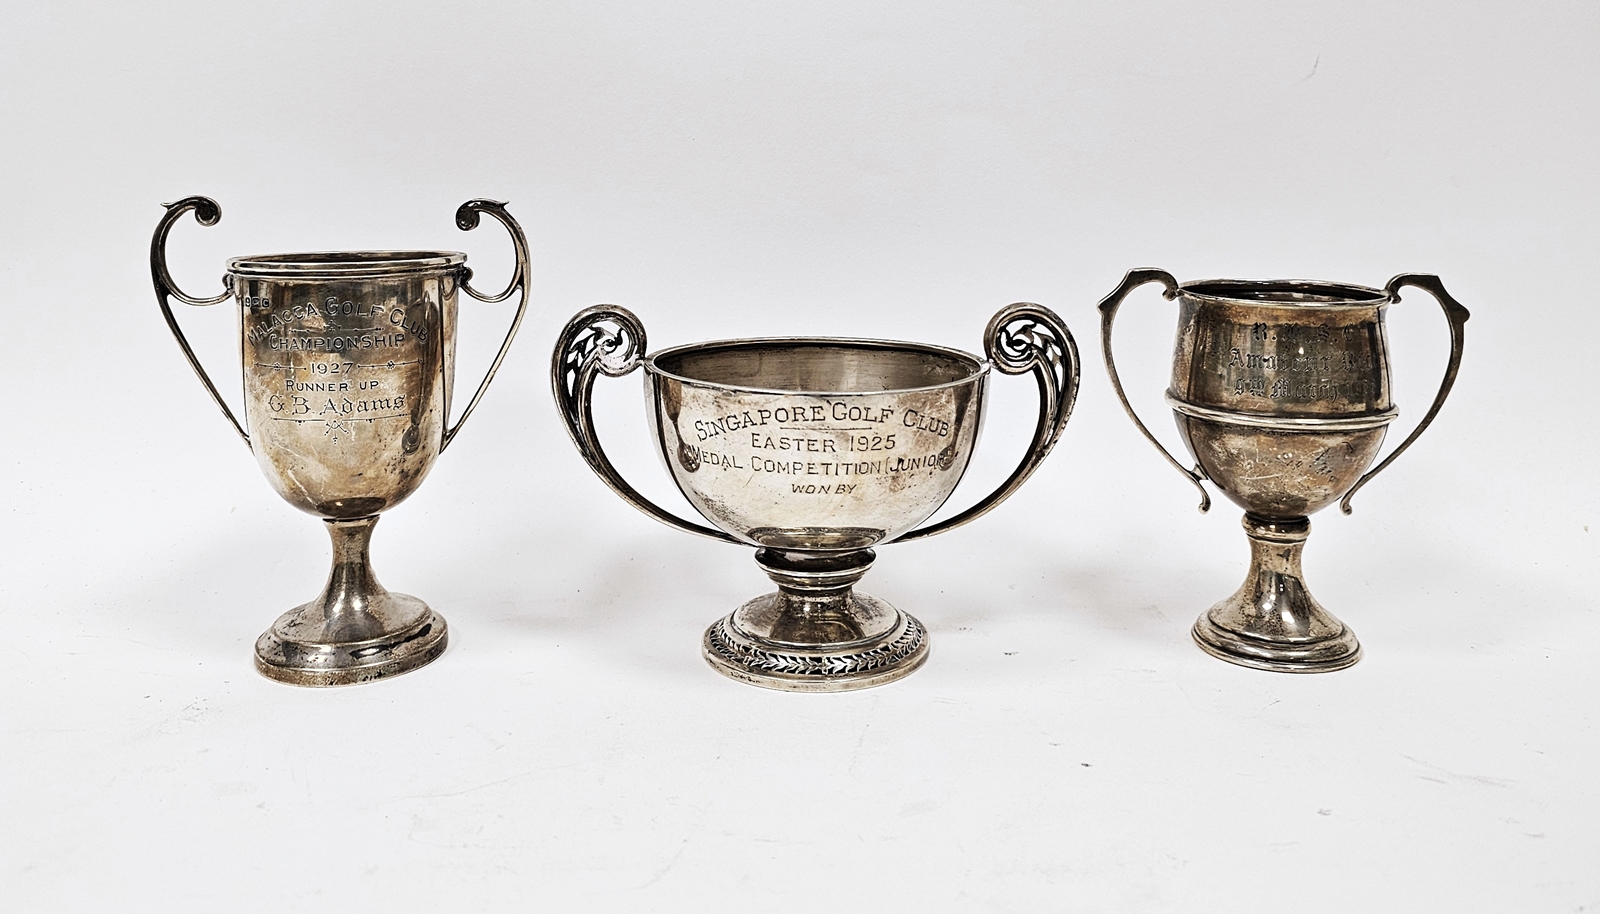 Silver two-handled trophy by Deakin & Francis, Birmingham 1923, of circular form with pierced scroll